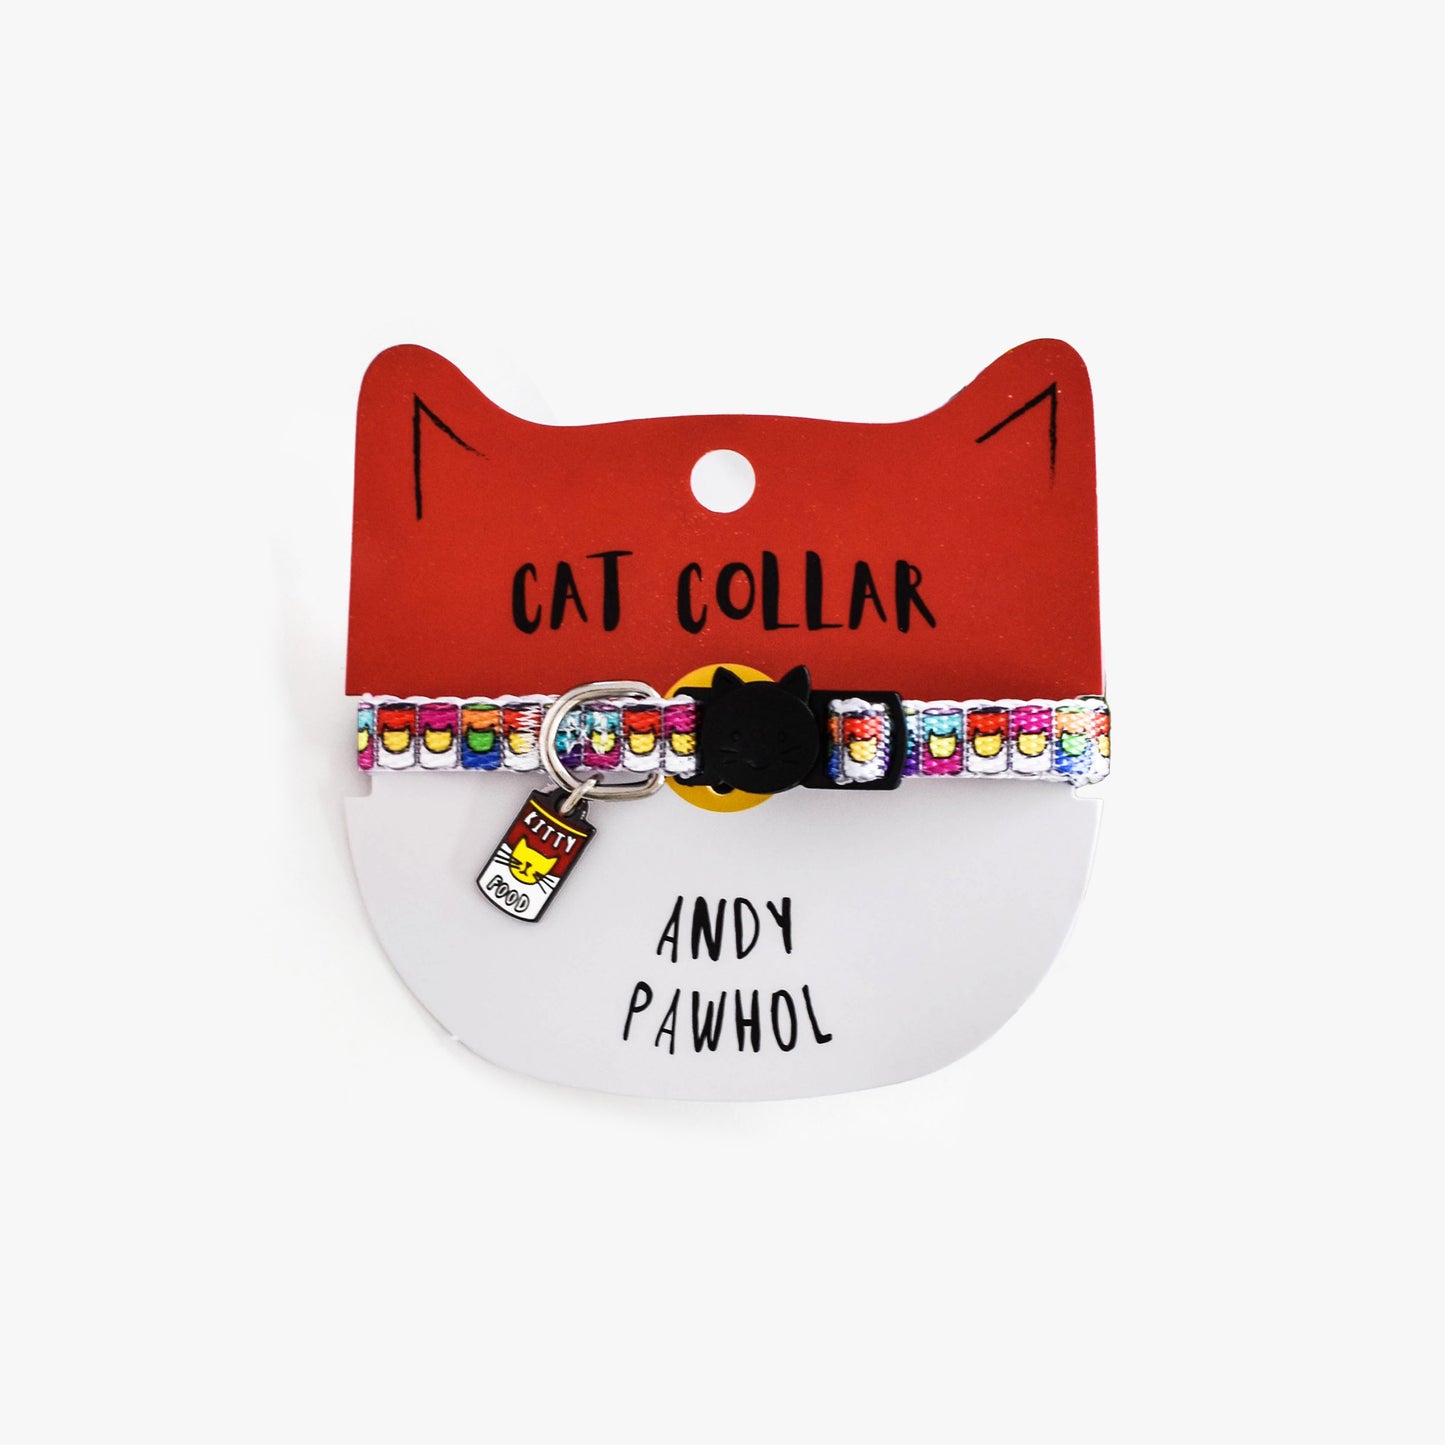 Artist Cat Collar - Andy Pawhol